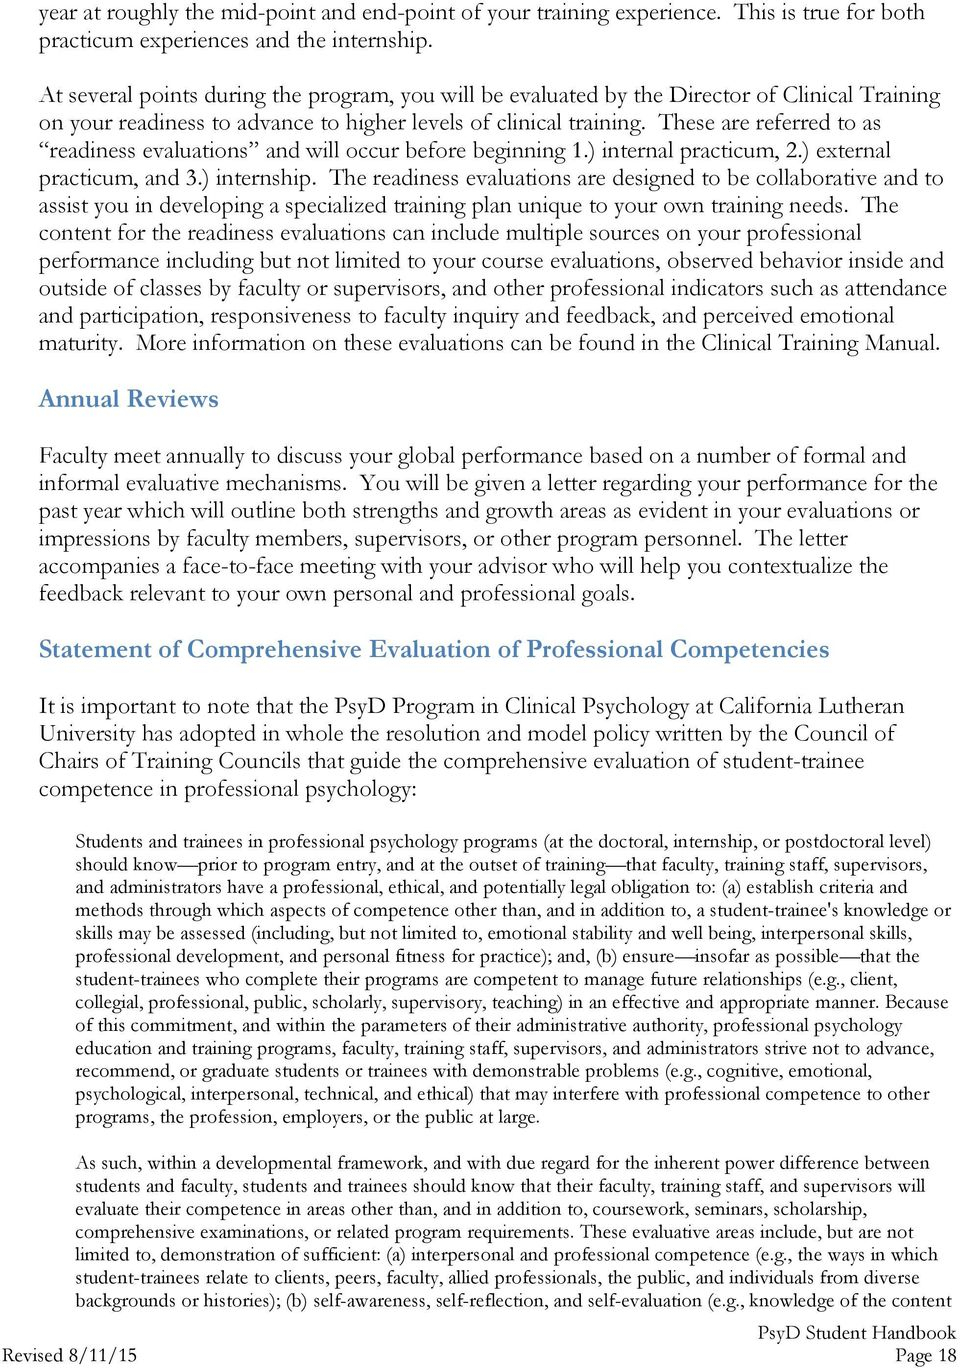 Psyd Program In Clinical Psychology Student Handbook Psyd regarding dimensions 960 X 1368